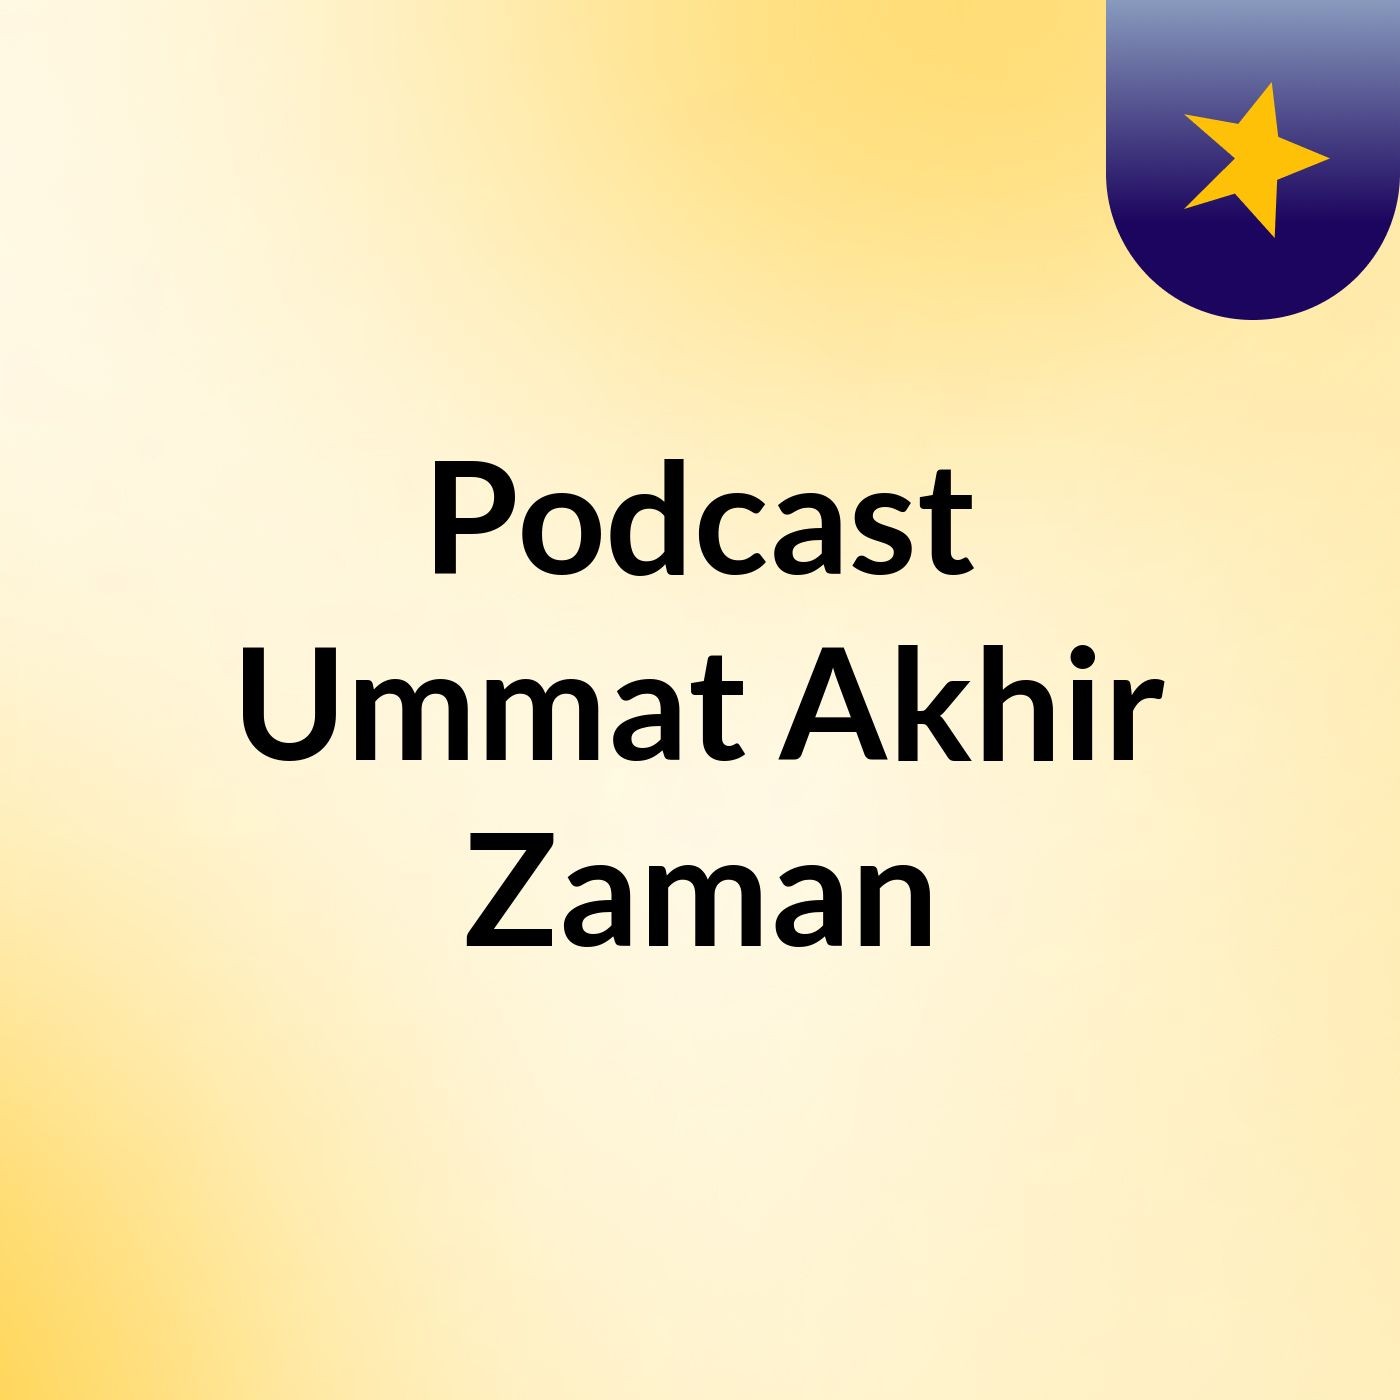 Podcast Ummat Akhir Zaman